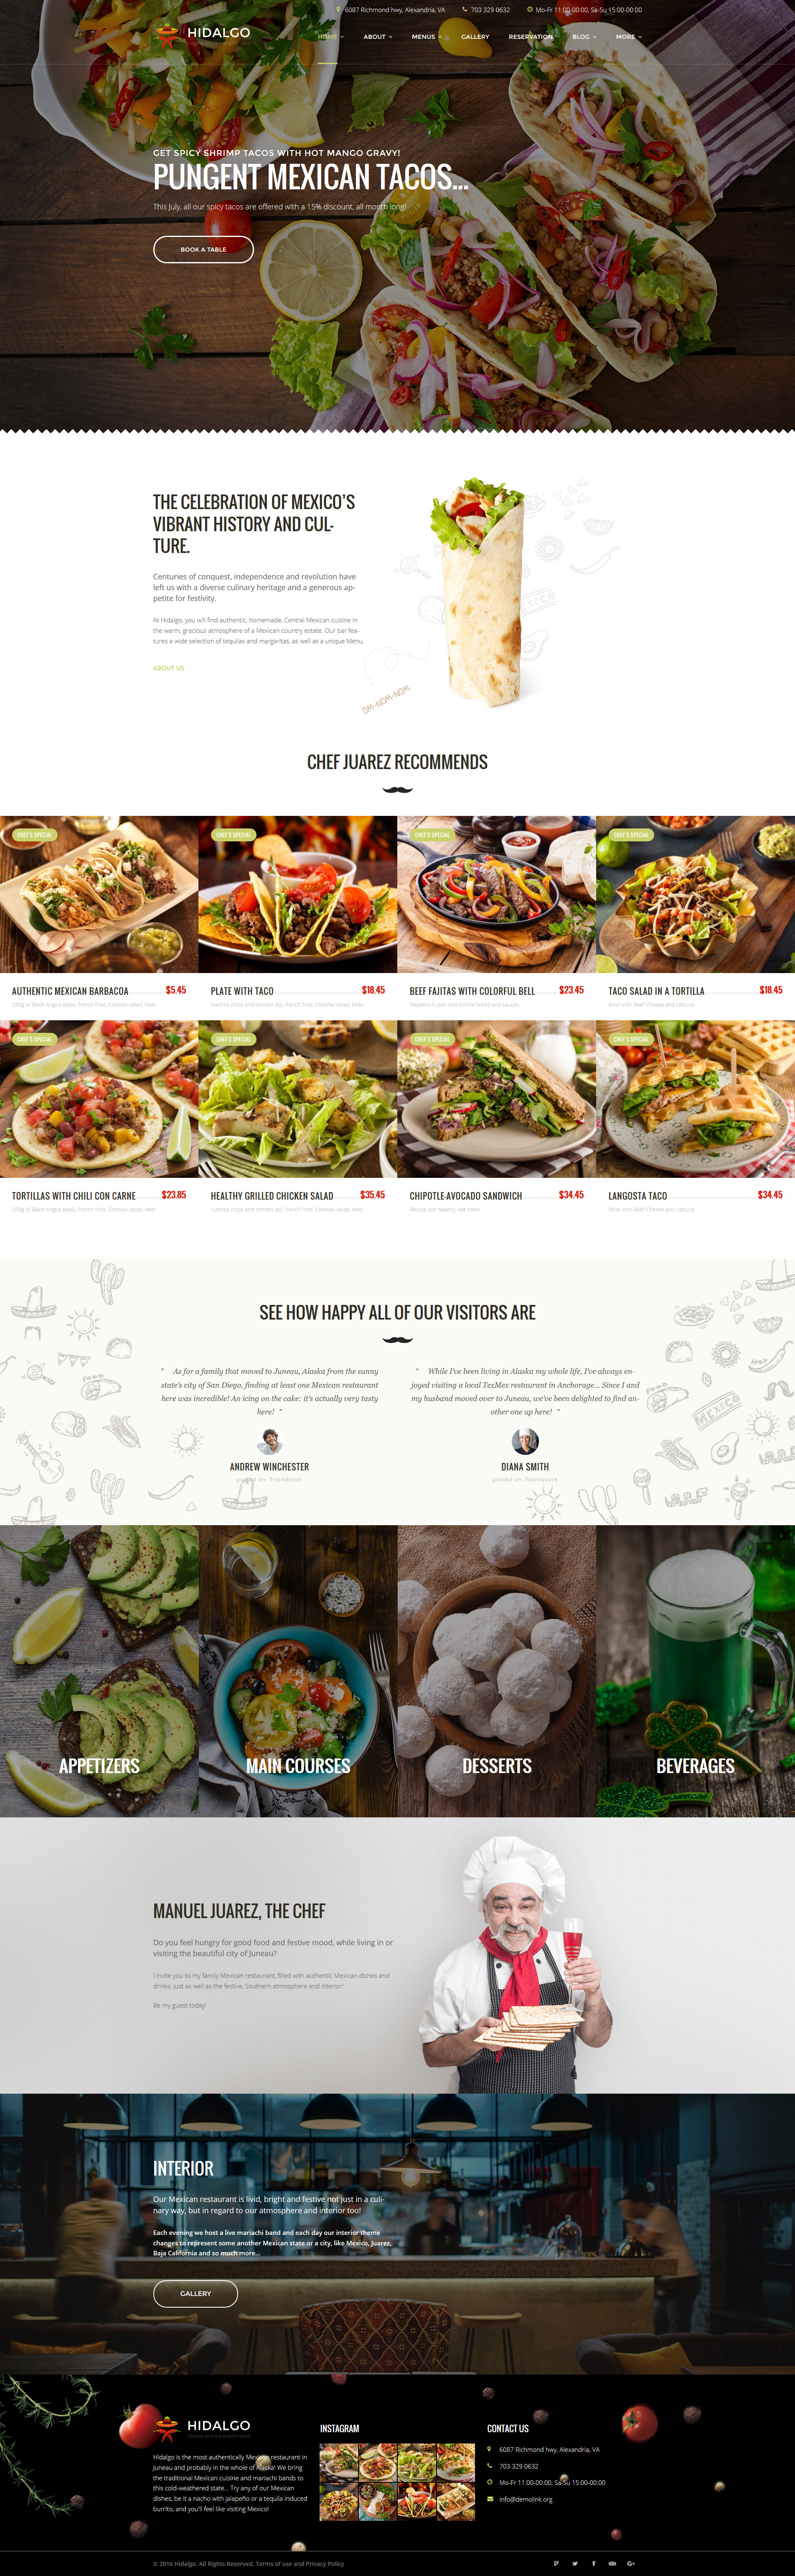 Hidalgo - Mexican Food Restaurant WordPress Theme